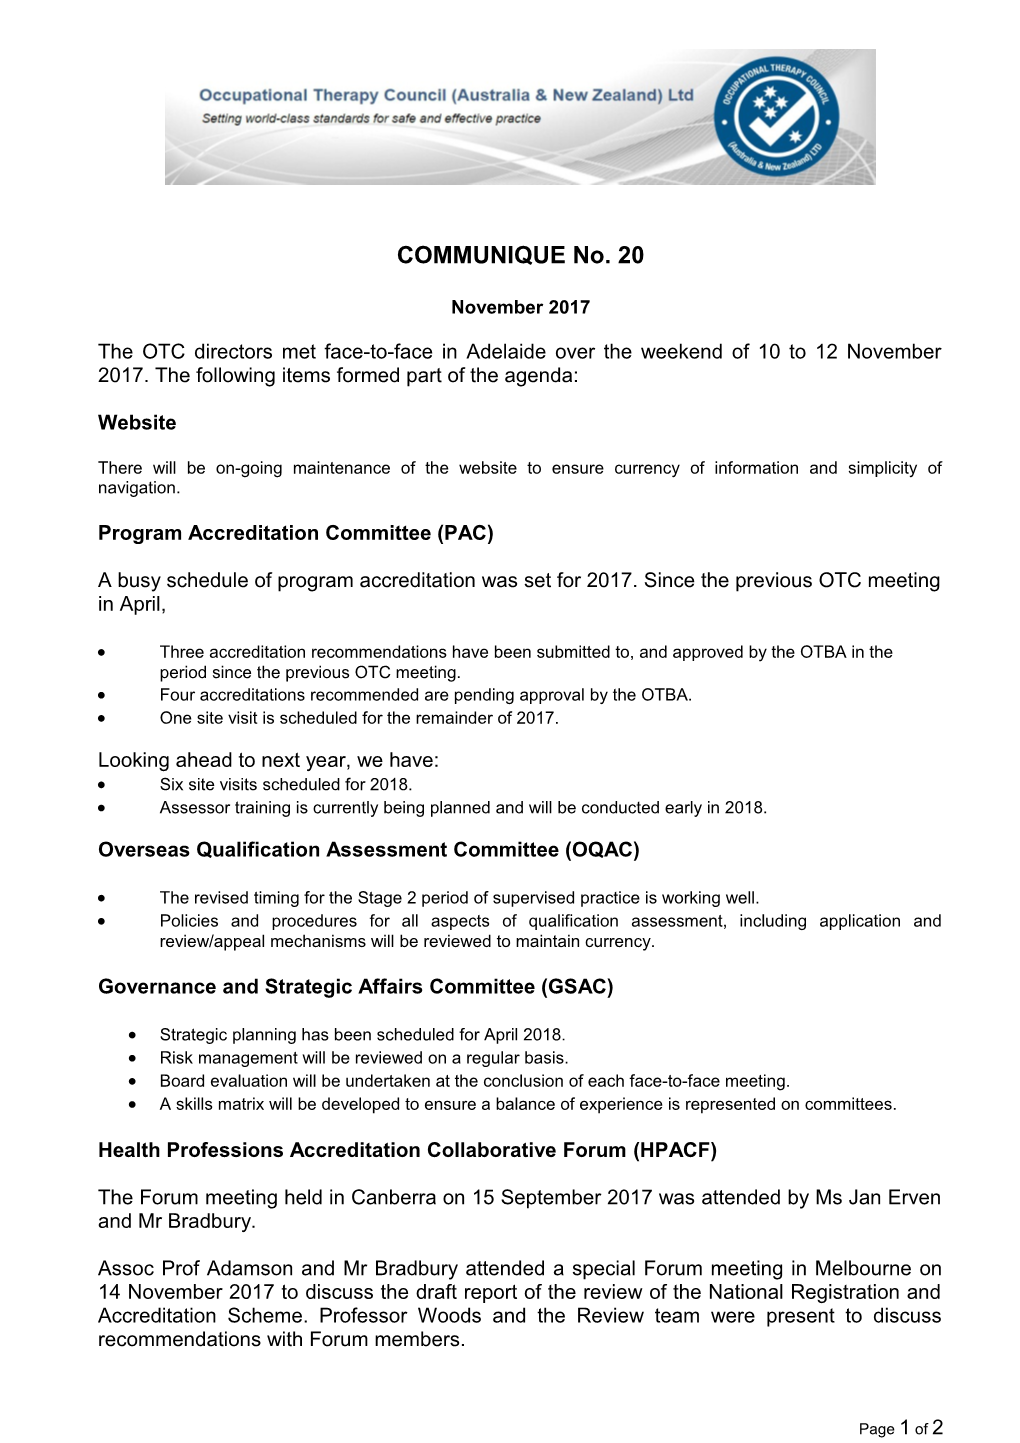 Program Accreditation Committee (PAC)